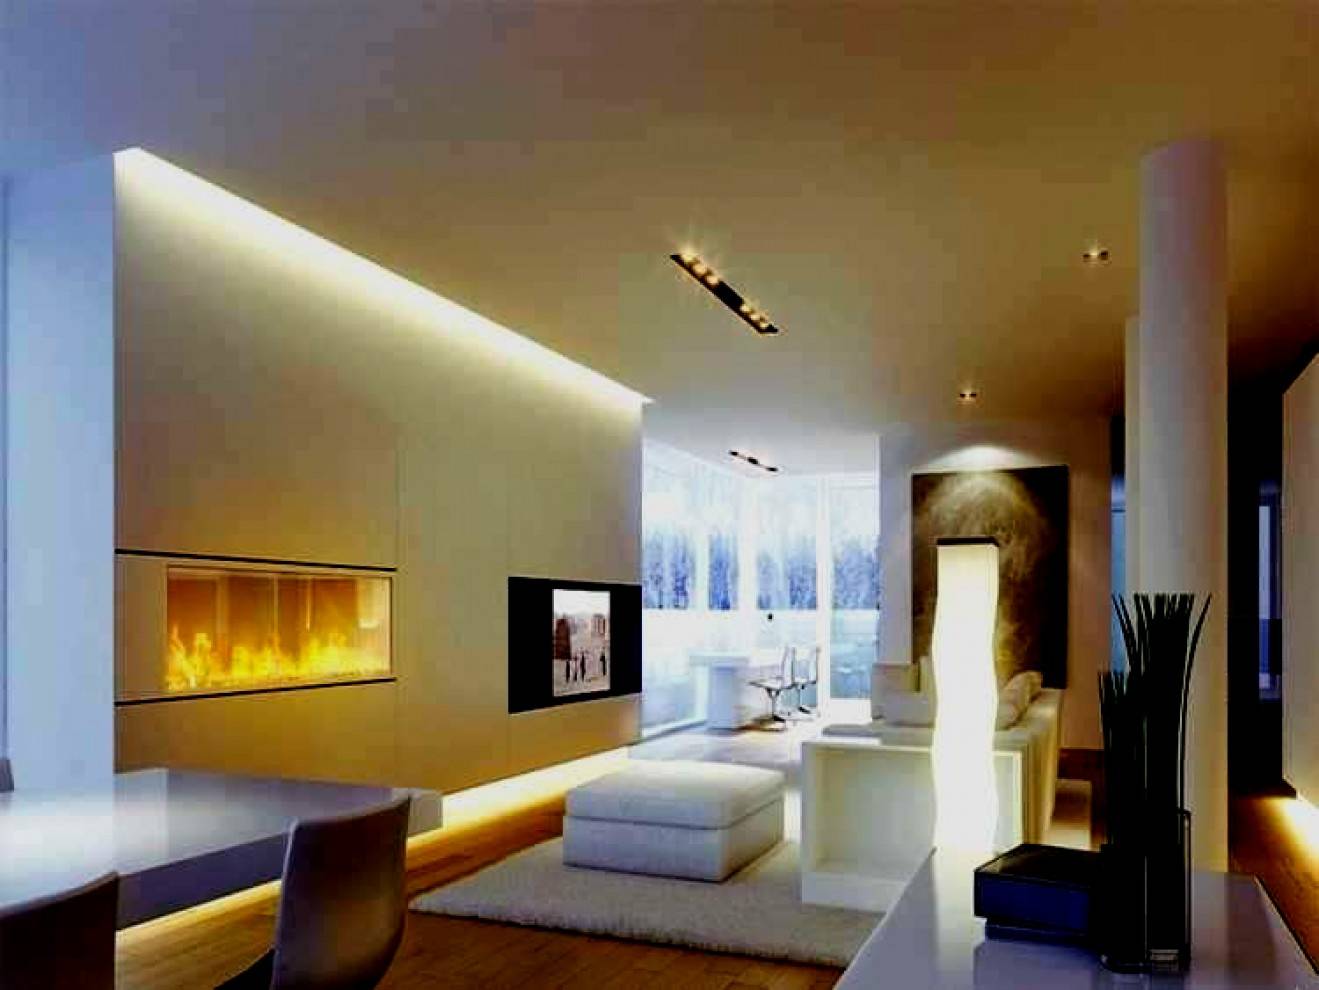 deko fur wohnzimmer ideen best of beleuchtung wohnzimmer ideen licht brillant led wohnzimmer of deko fur wohnzimmer ideen